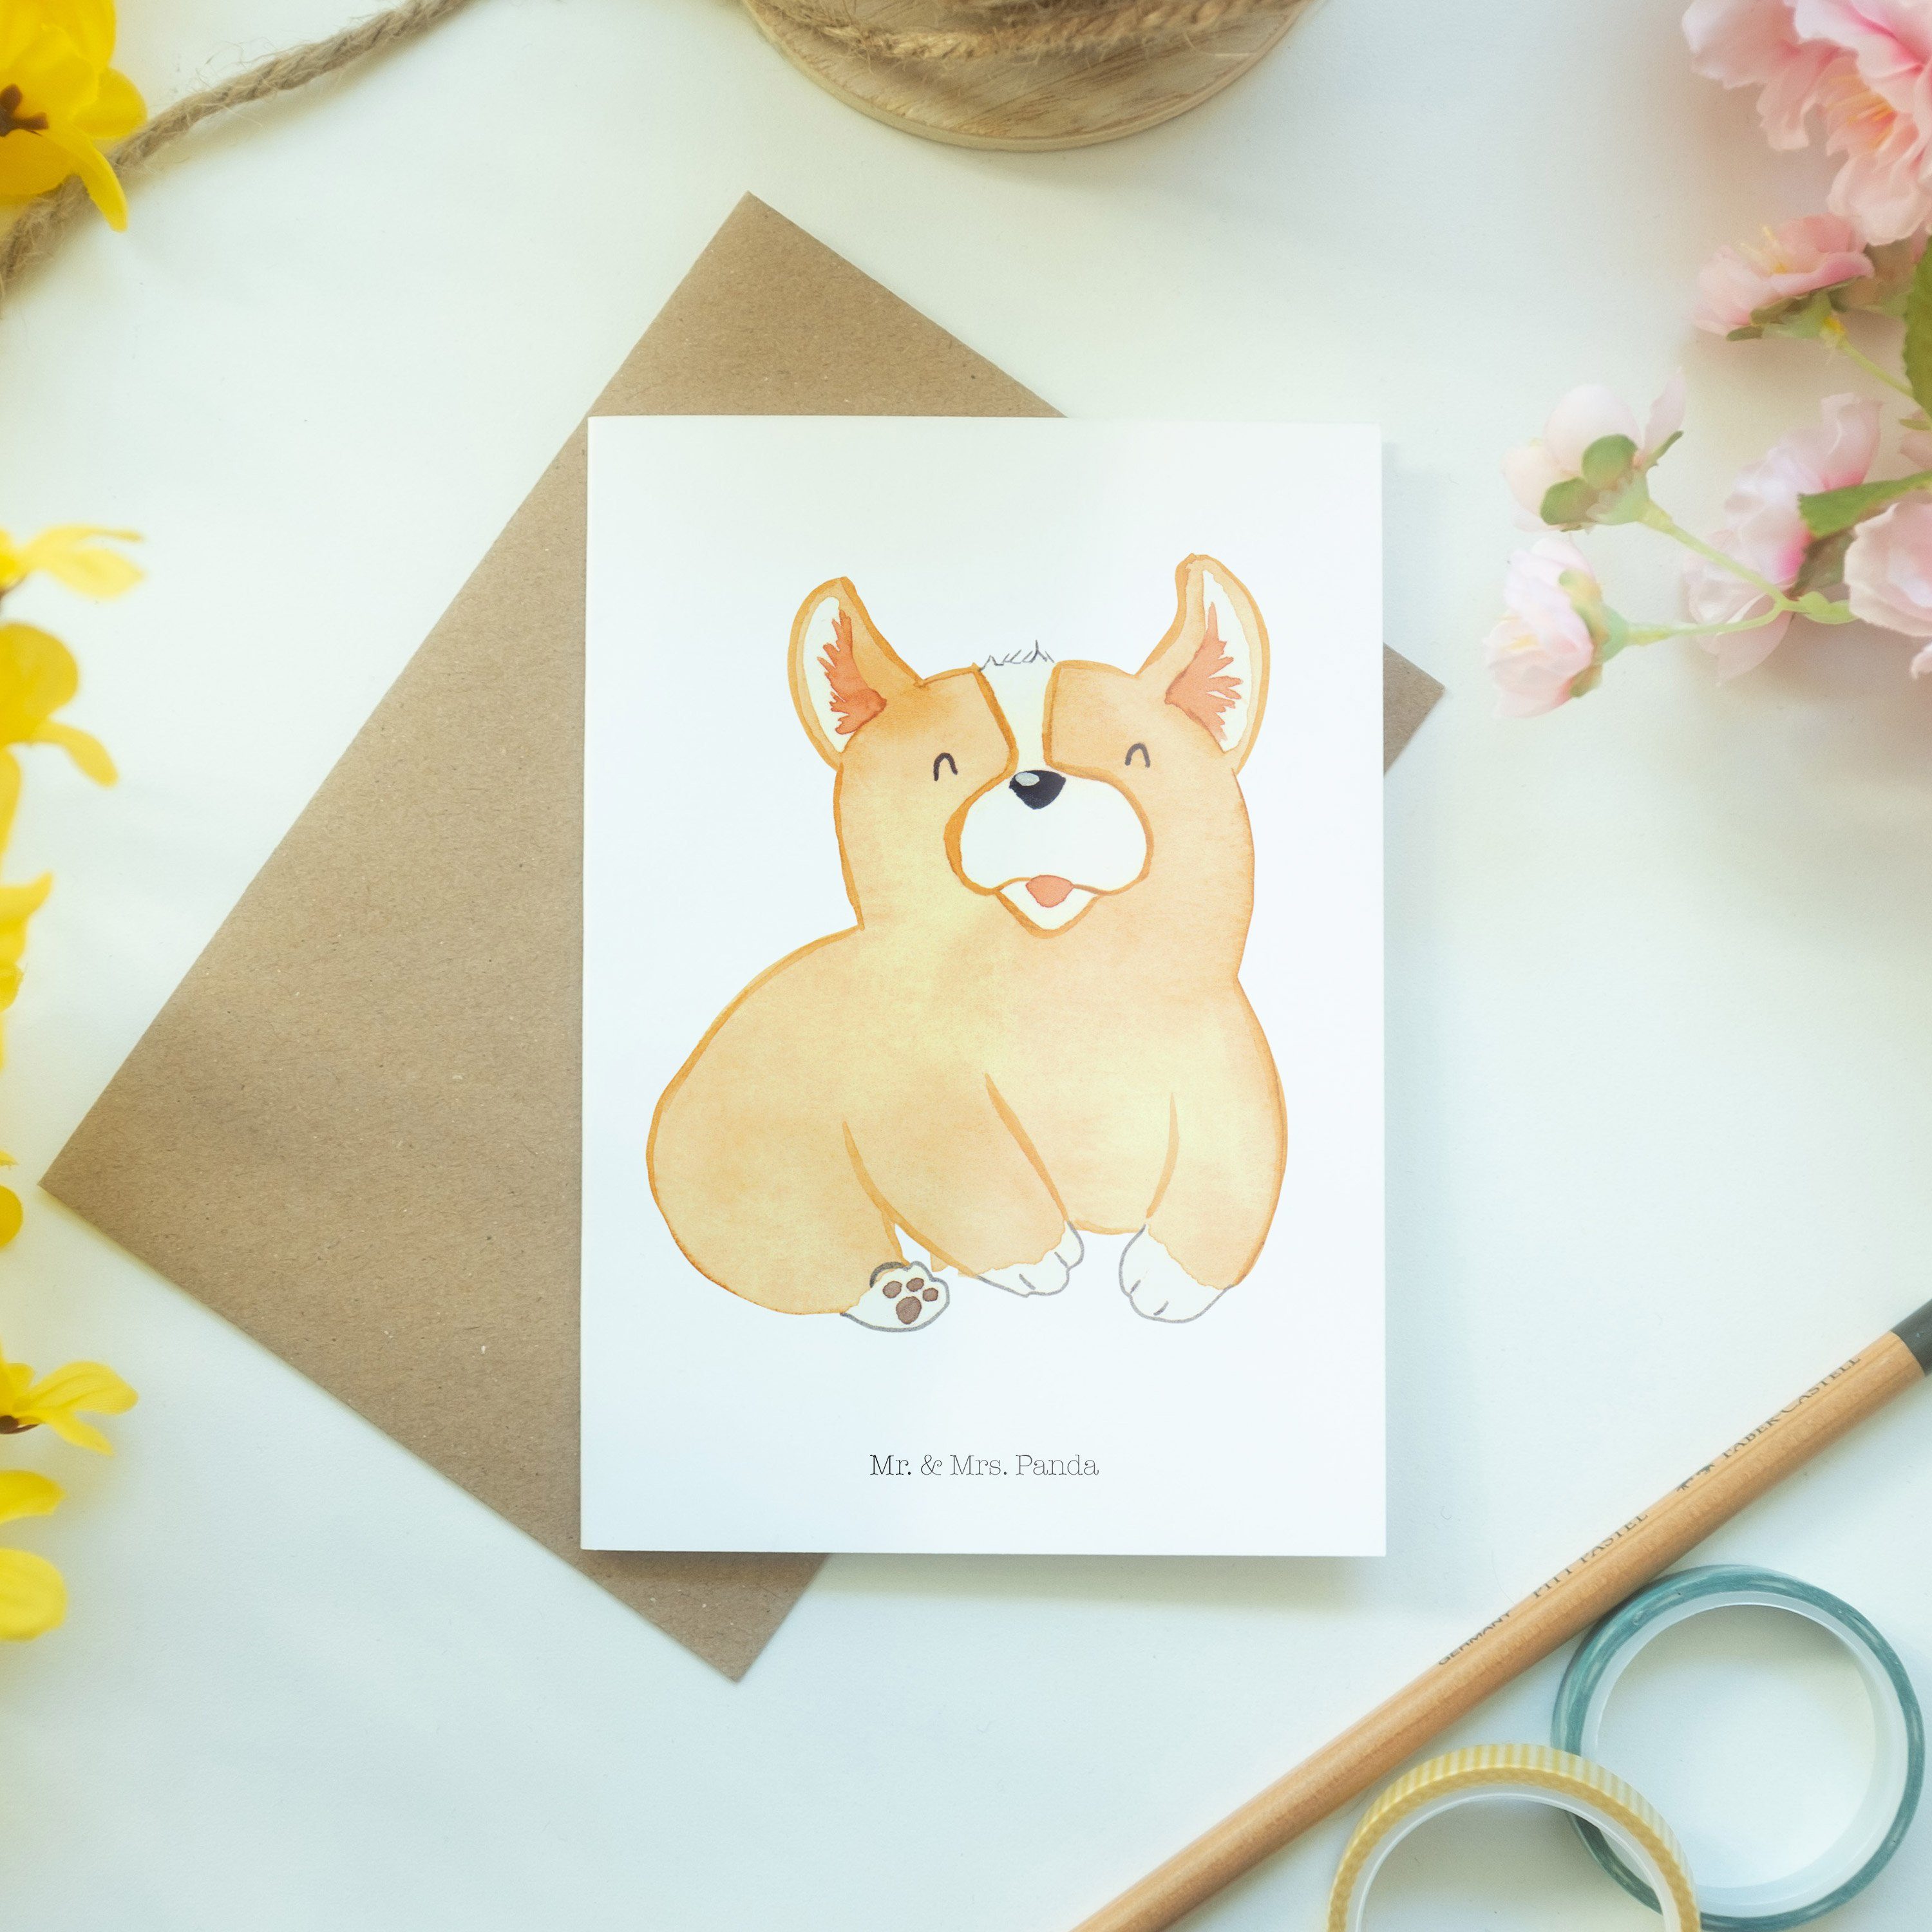 Mr. & Mrs. Panda - - Corgie Hundemama, Geschenk, Einladungskarte, Weiß Hundebesitzer Grußkarte